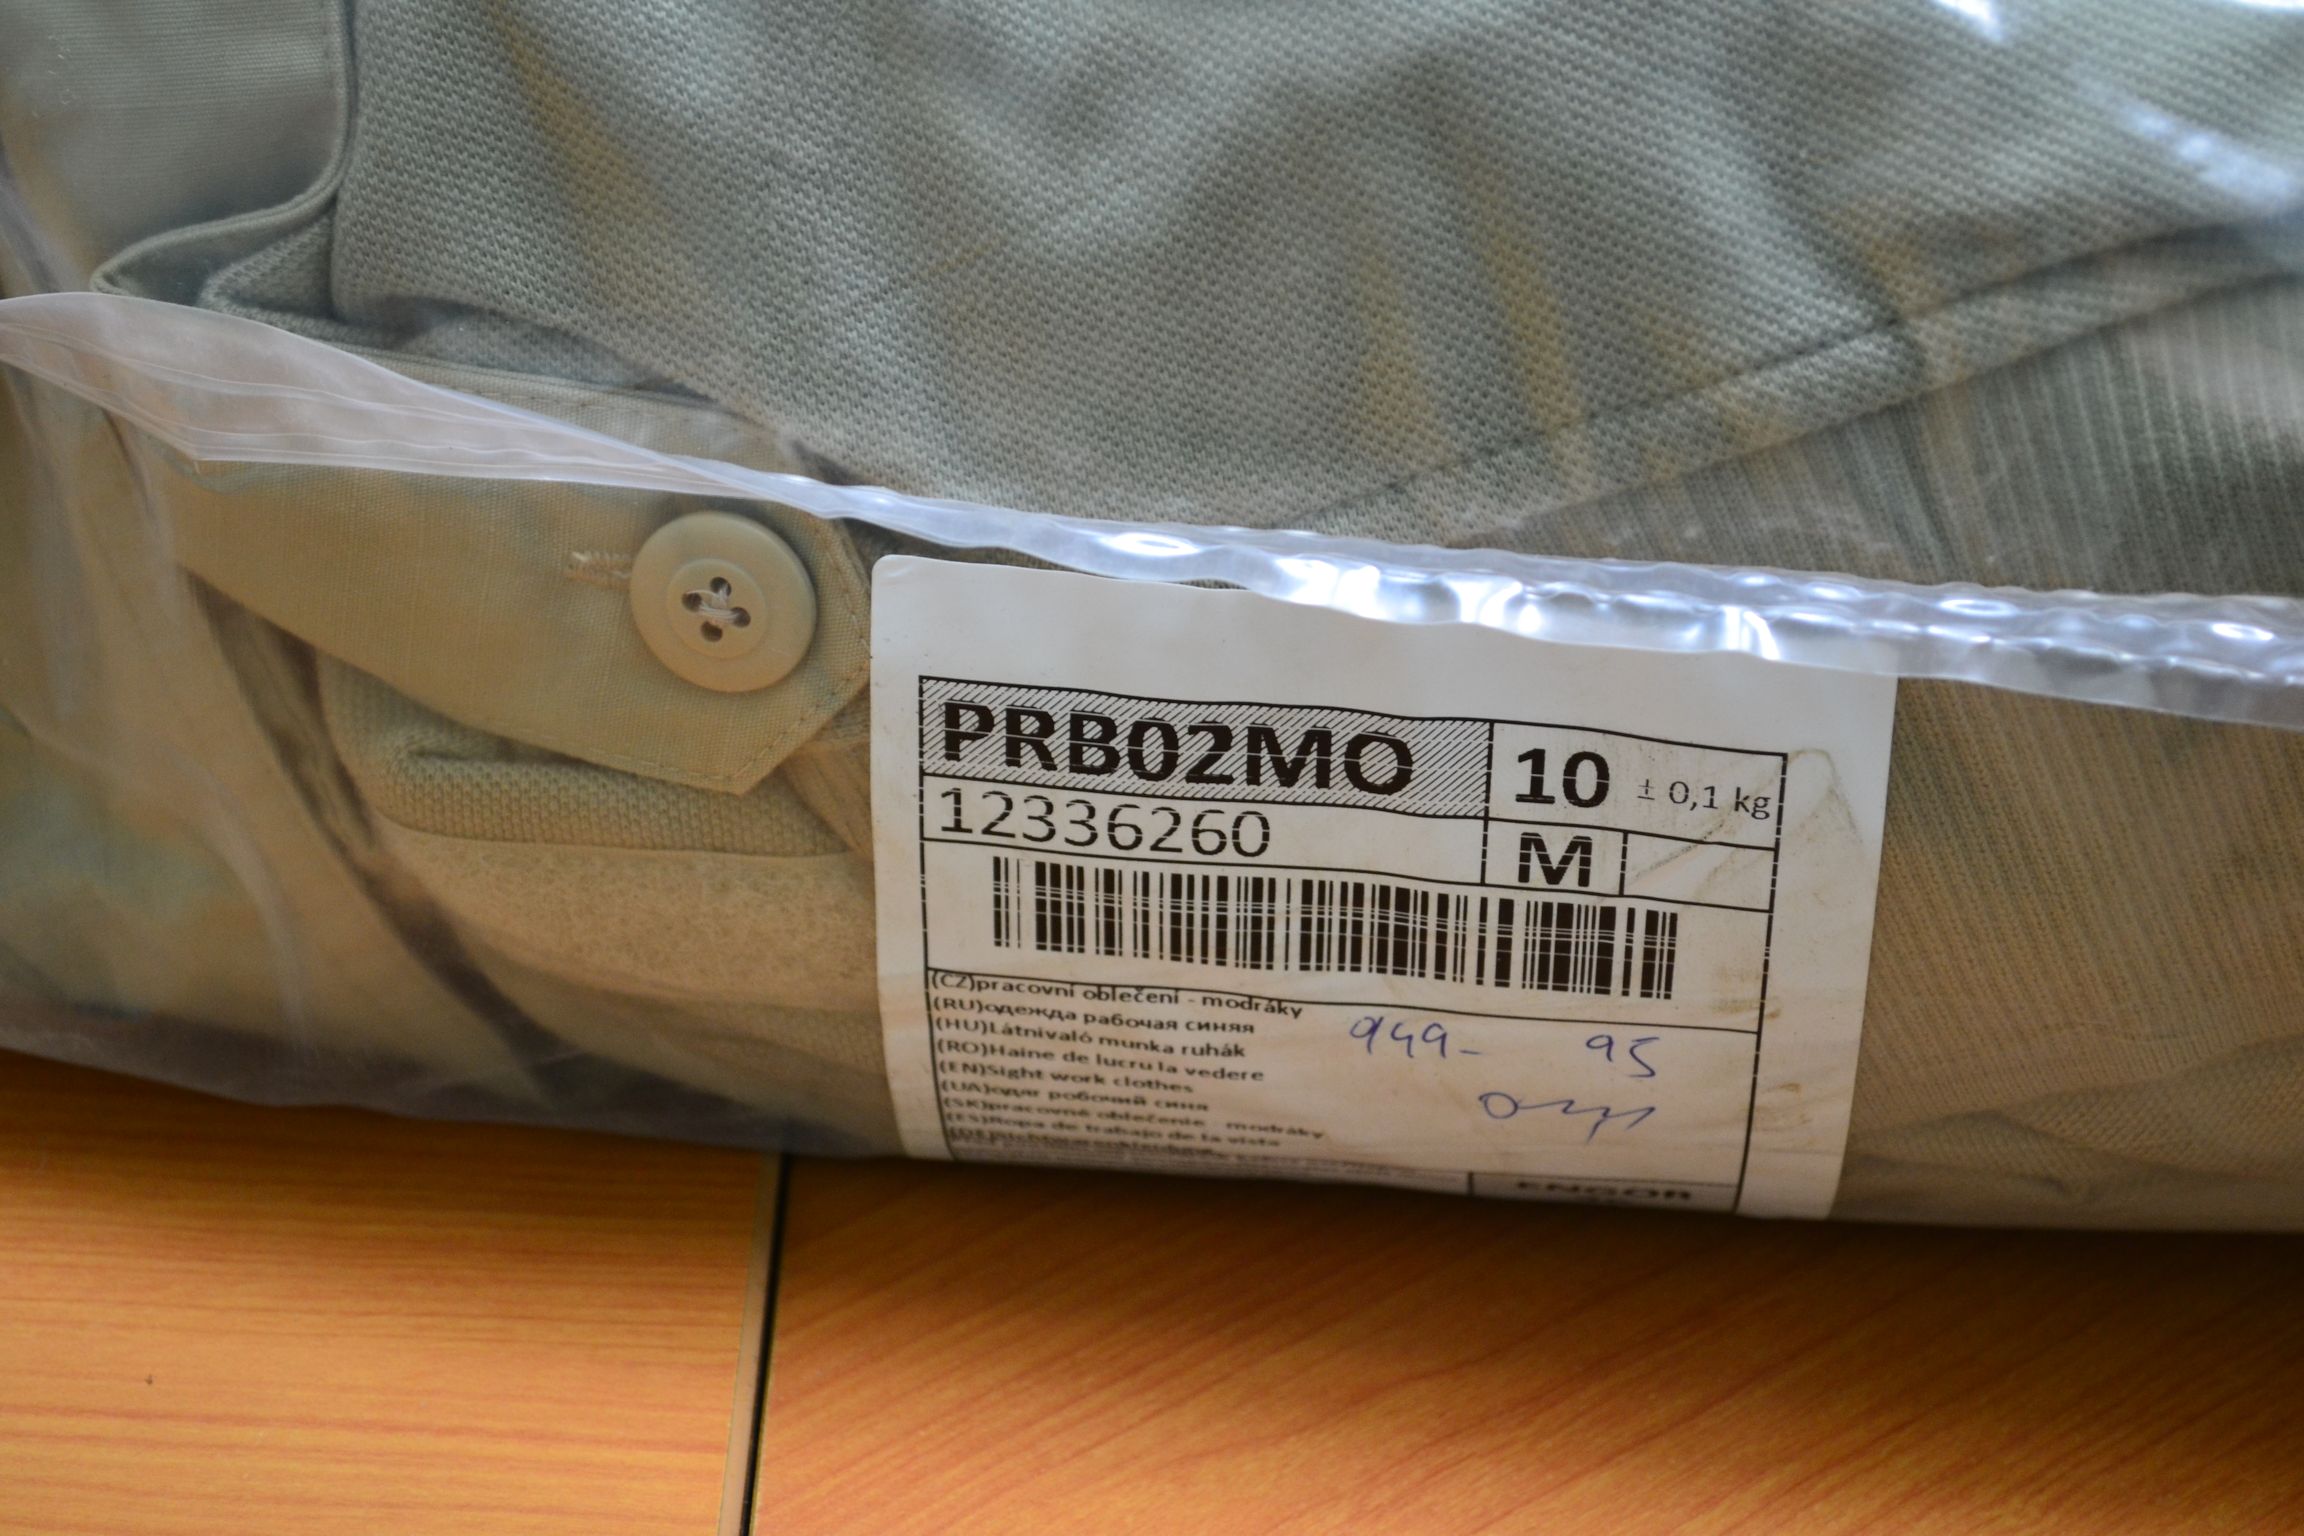 PRB02MO; Рабочая одежда; код мешка 12336260